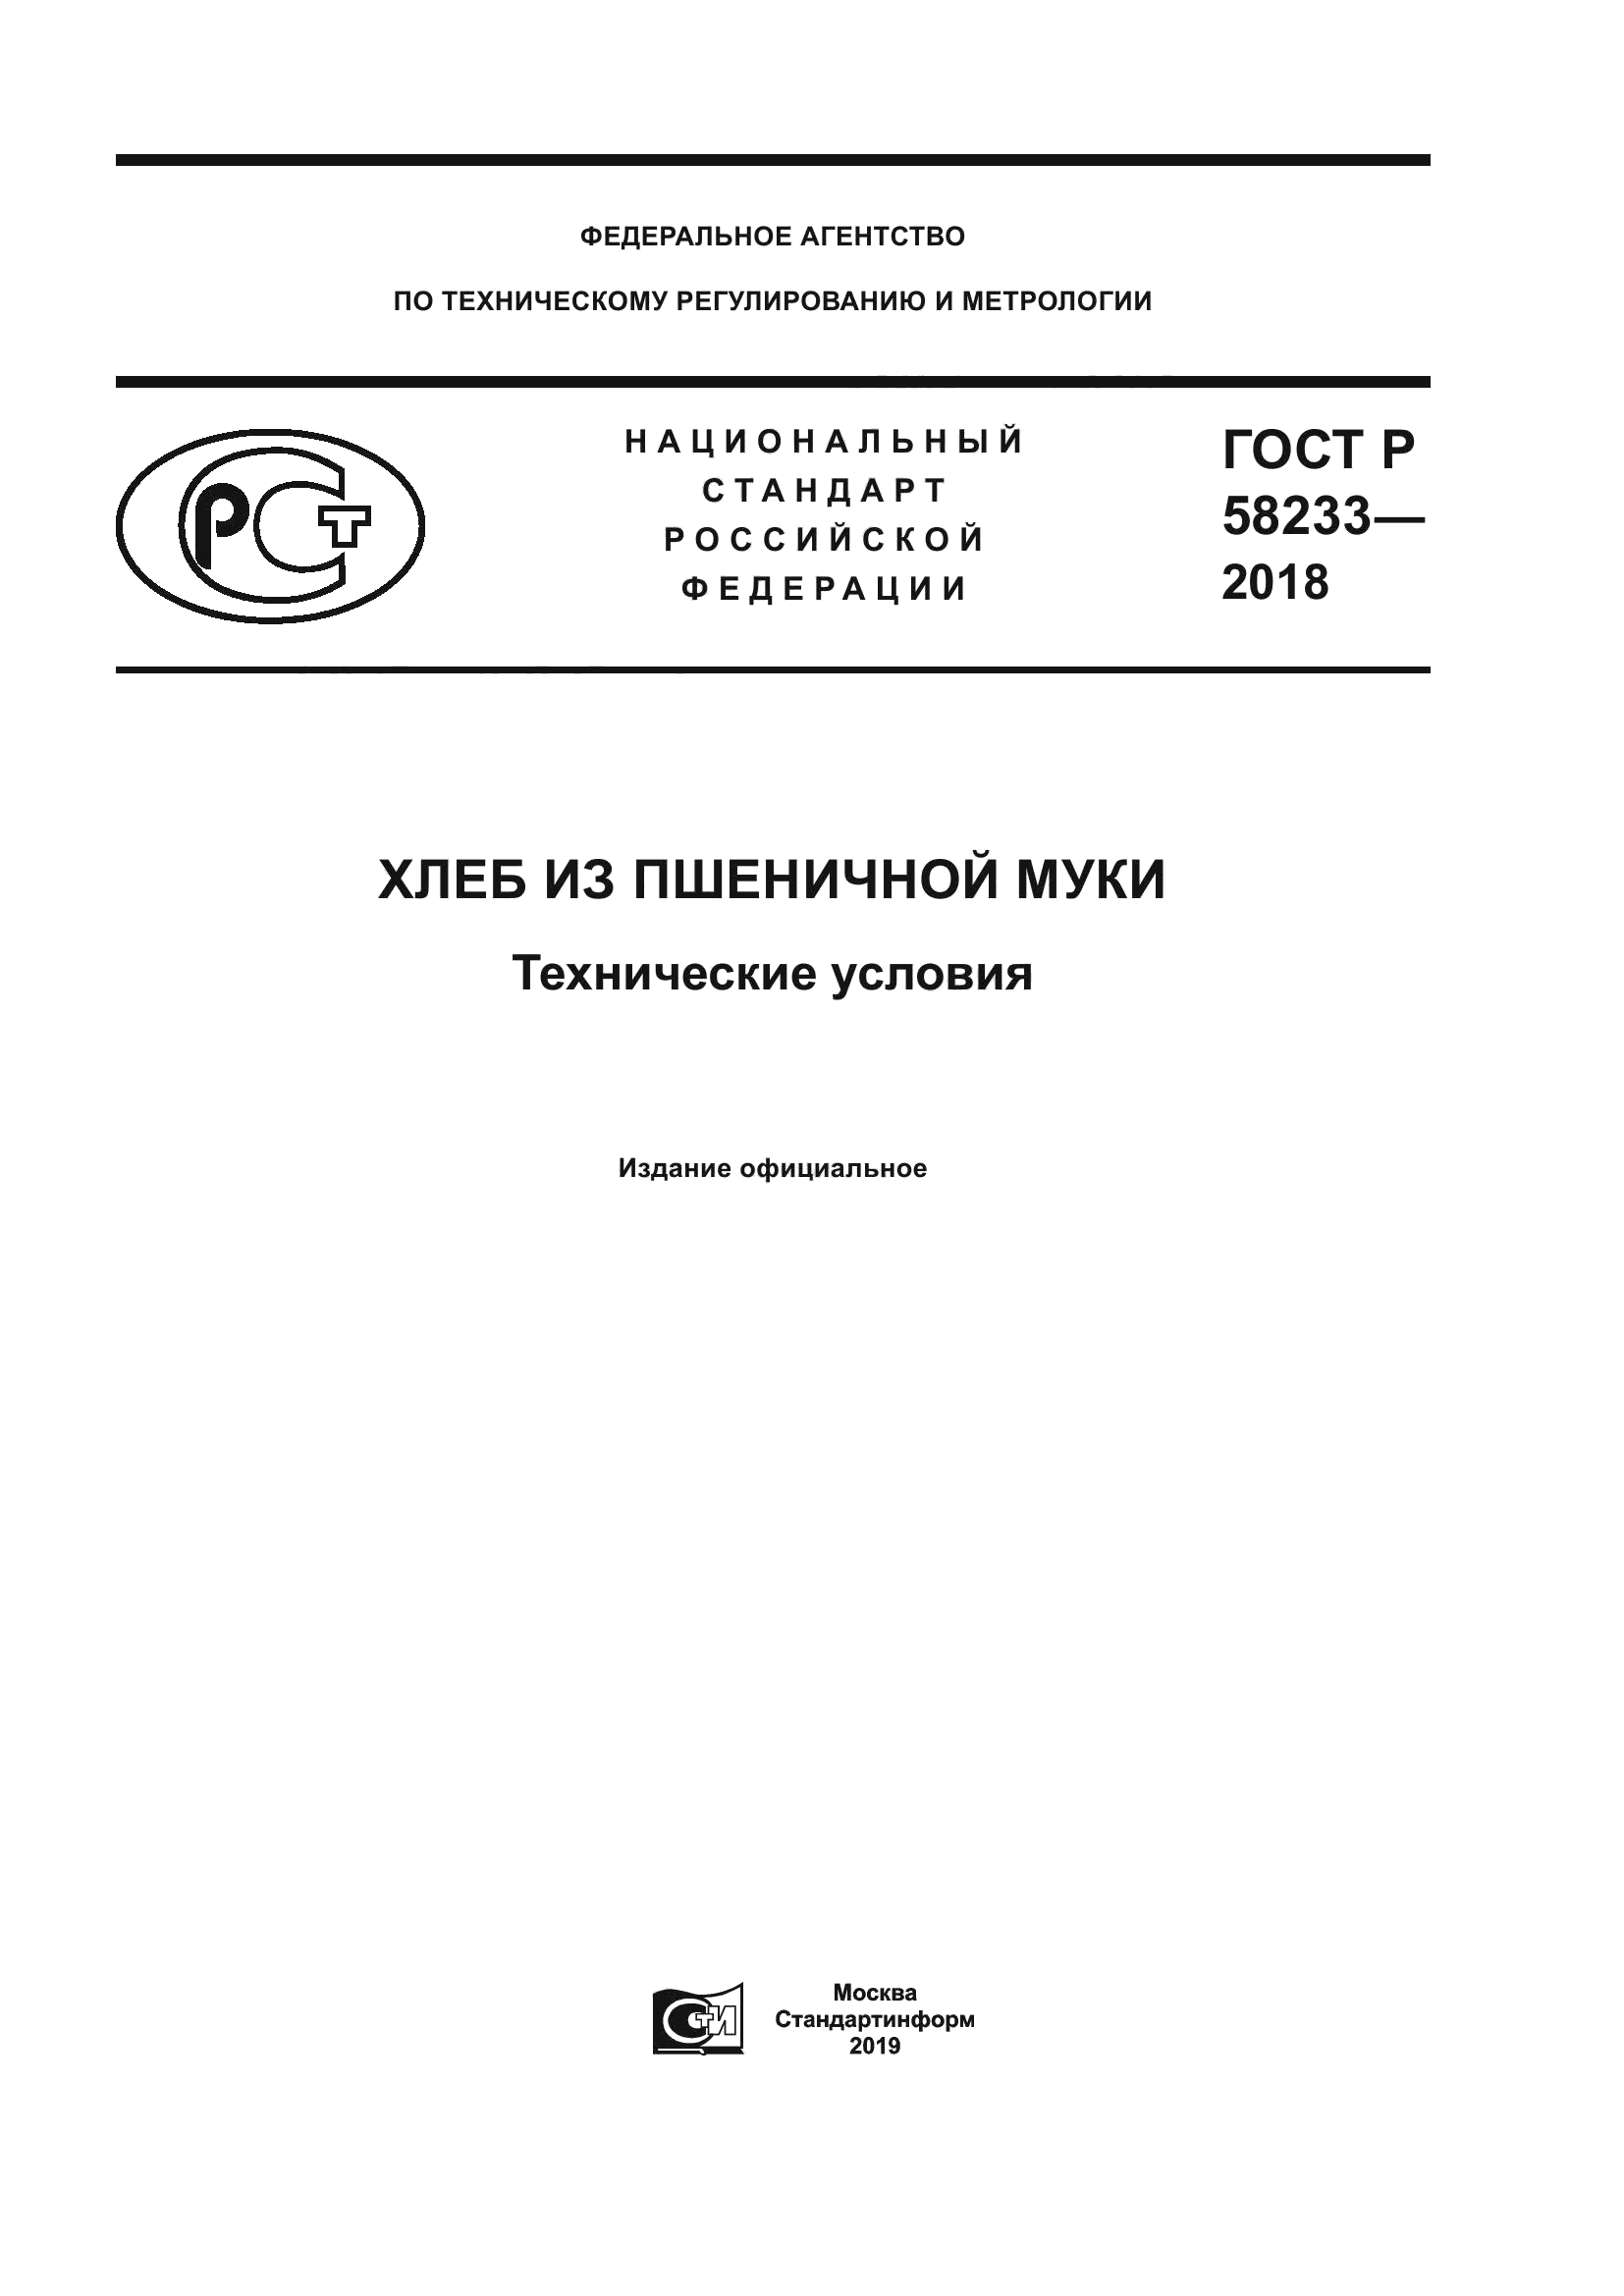 ГОСТ Р 58233-2018